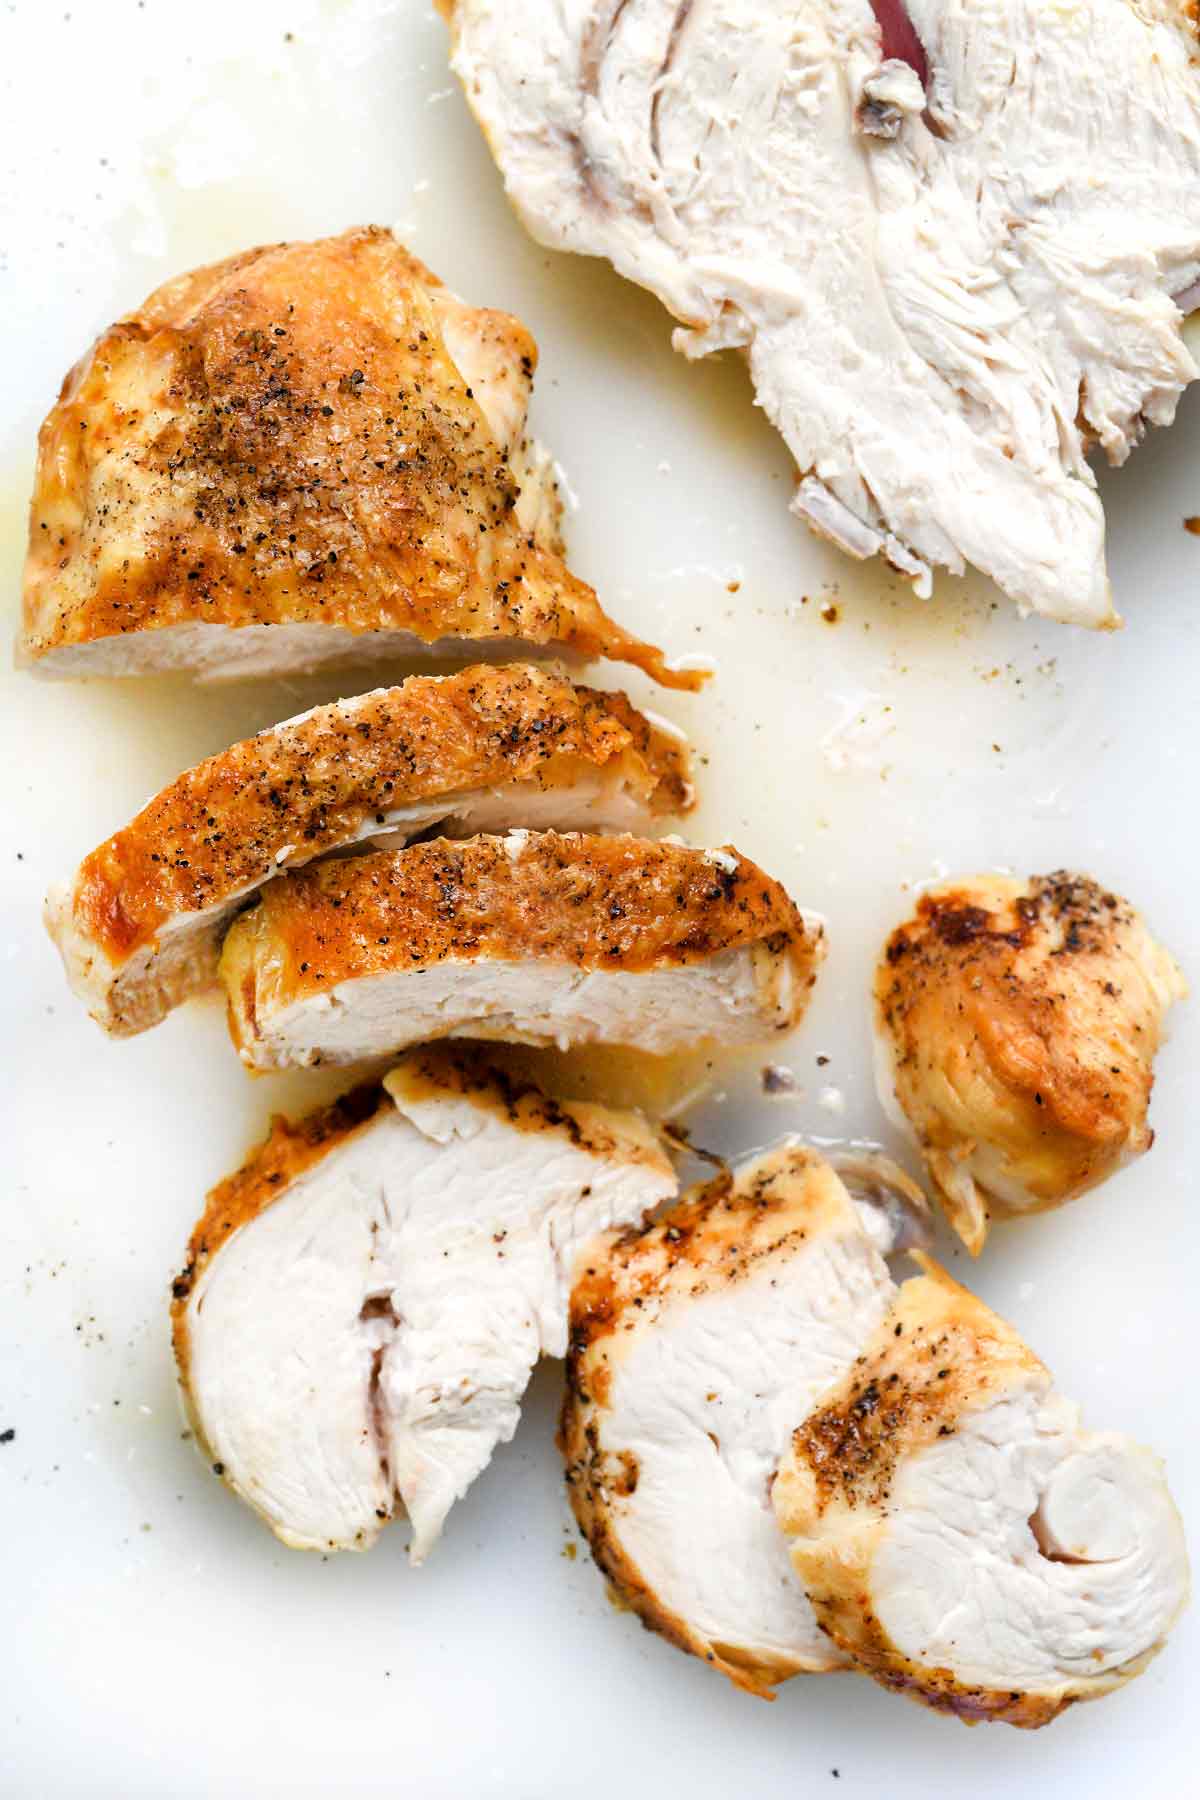 https://www.foodiecrush.com/wp-content/uploads/2018/01/Best-Baked-Chicken-Breast-foodiecrush.com-001.jpg